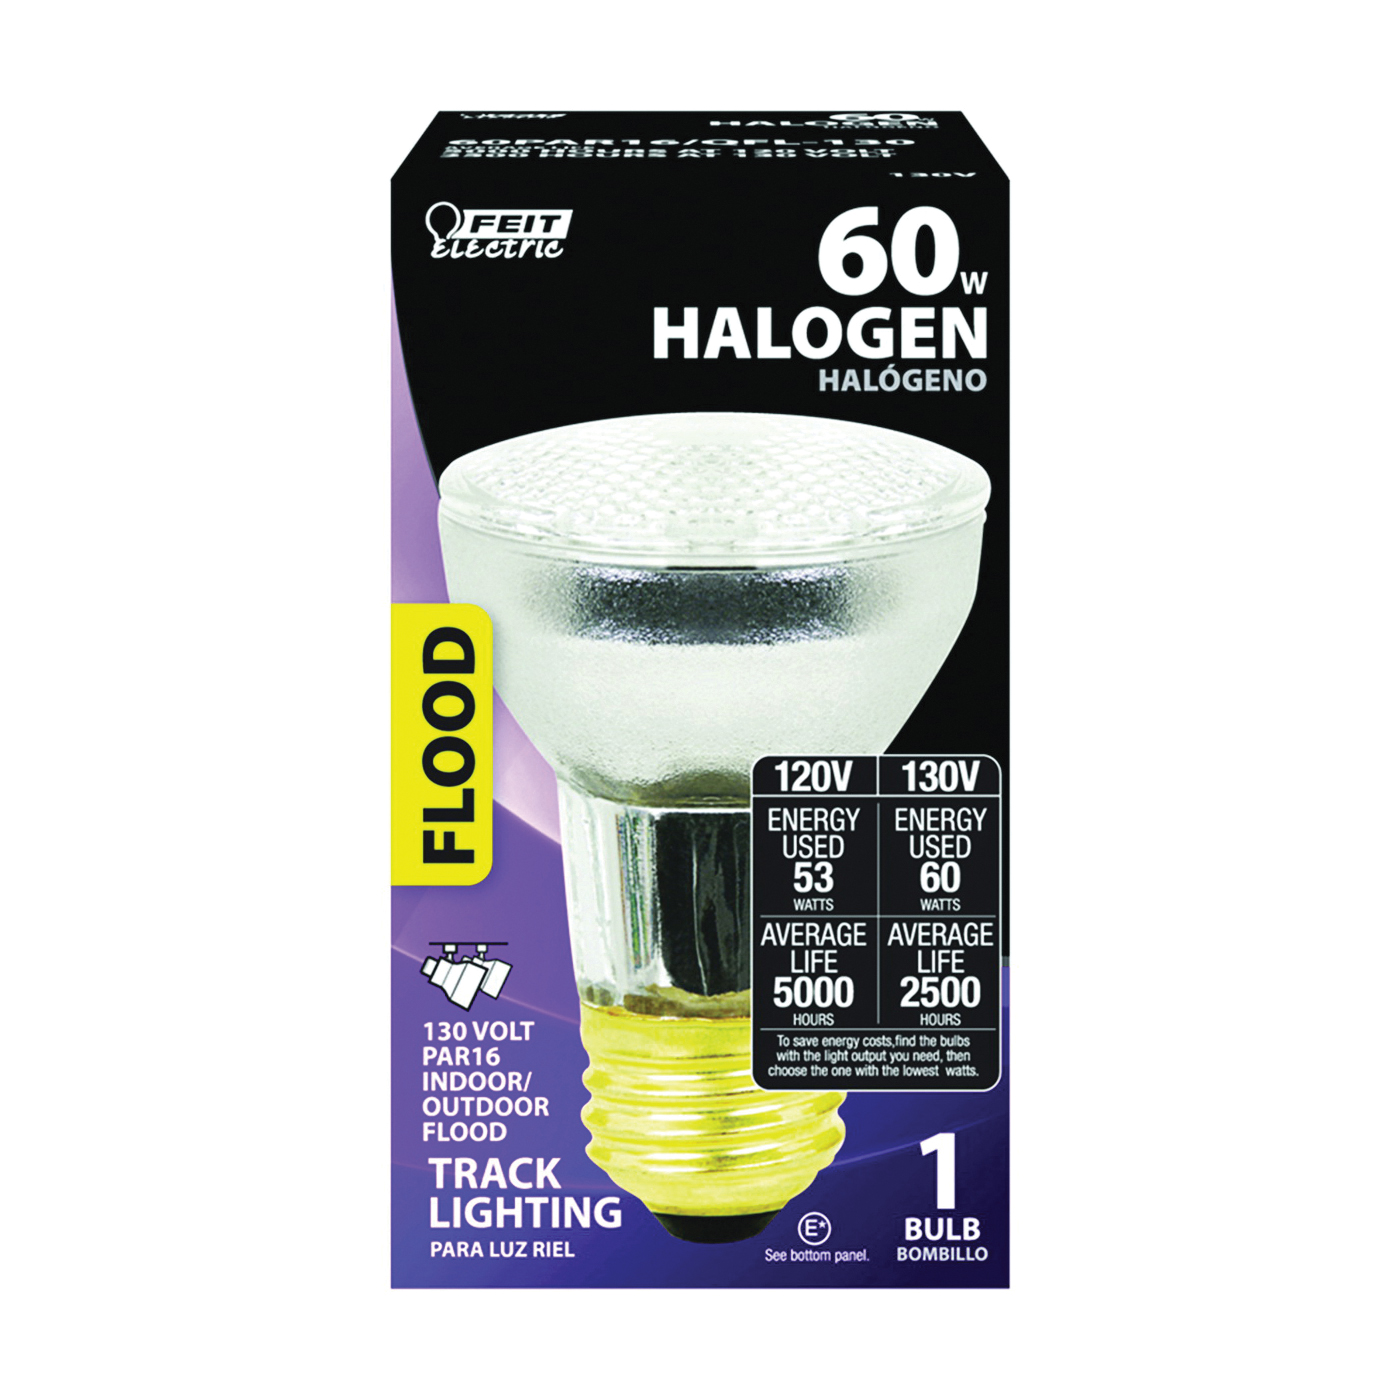 60PAR16/QFL-130 Halogen Bulb, 60 W, Medium E26 Lamp Base, PAR16 Lamp, Bright Light